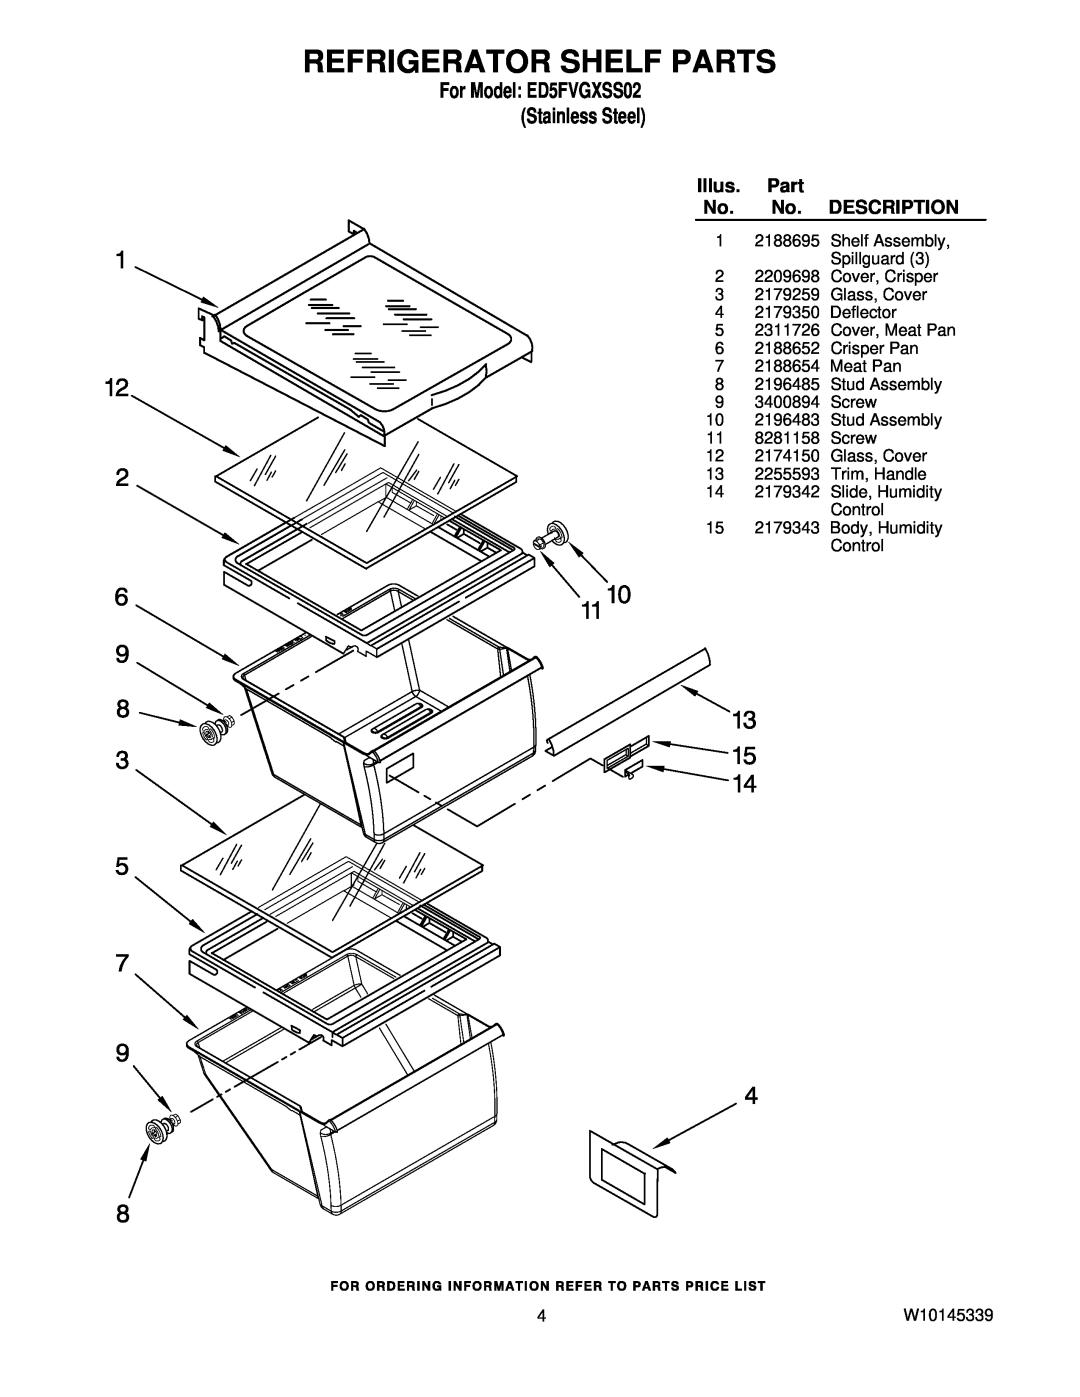 Whirlpool manual Refrigerator Shelf Parts, For Model ED5FVGXSS02 Stainless Steel, Illus, Description 